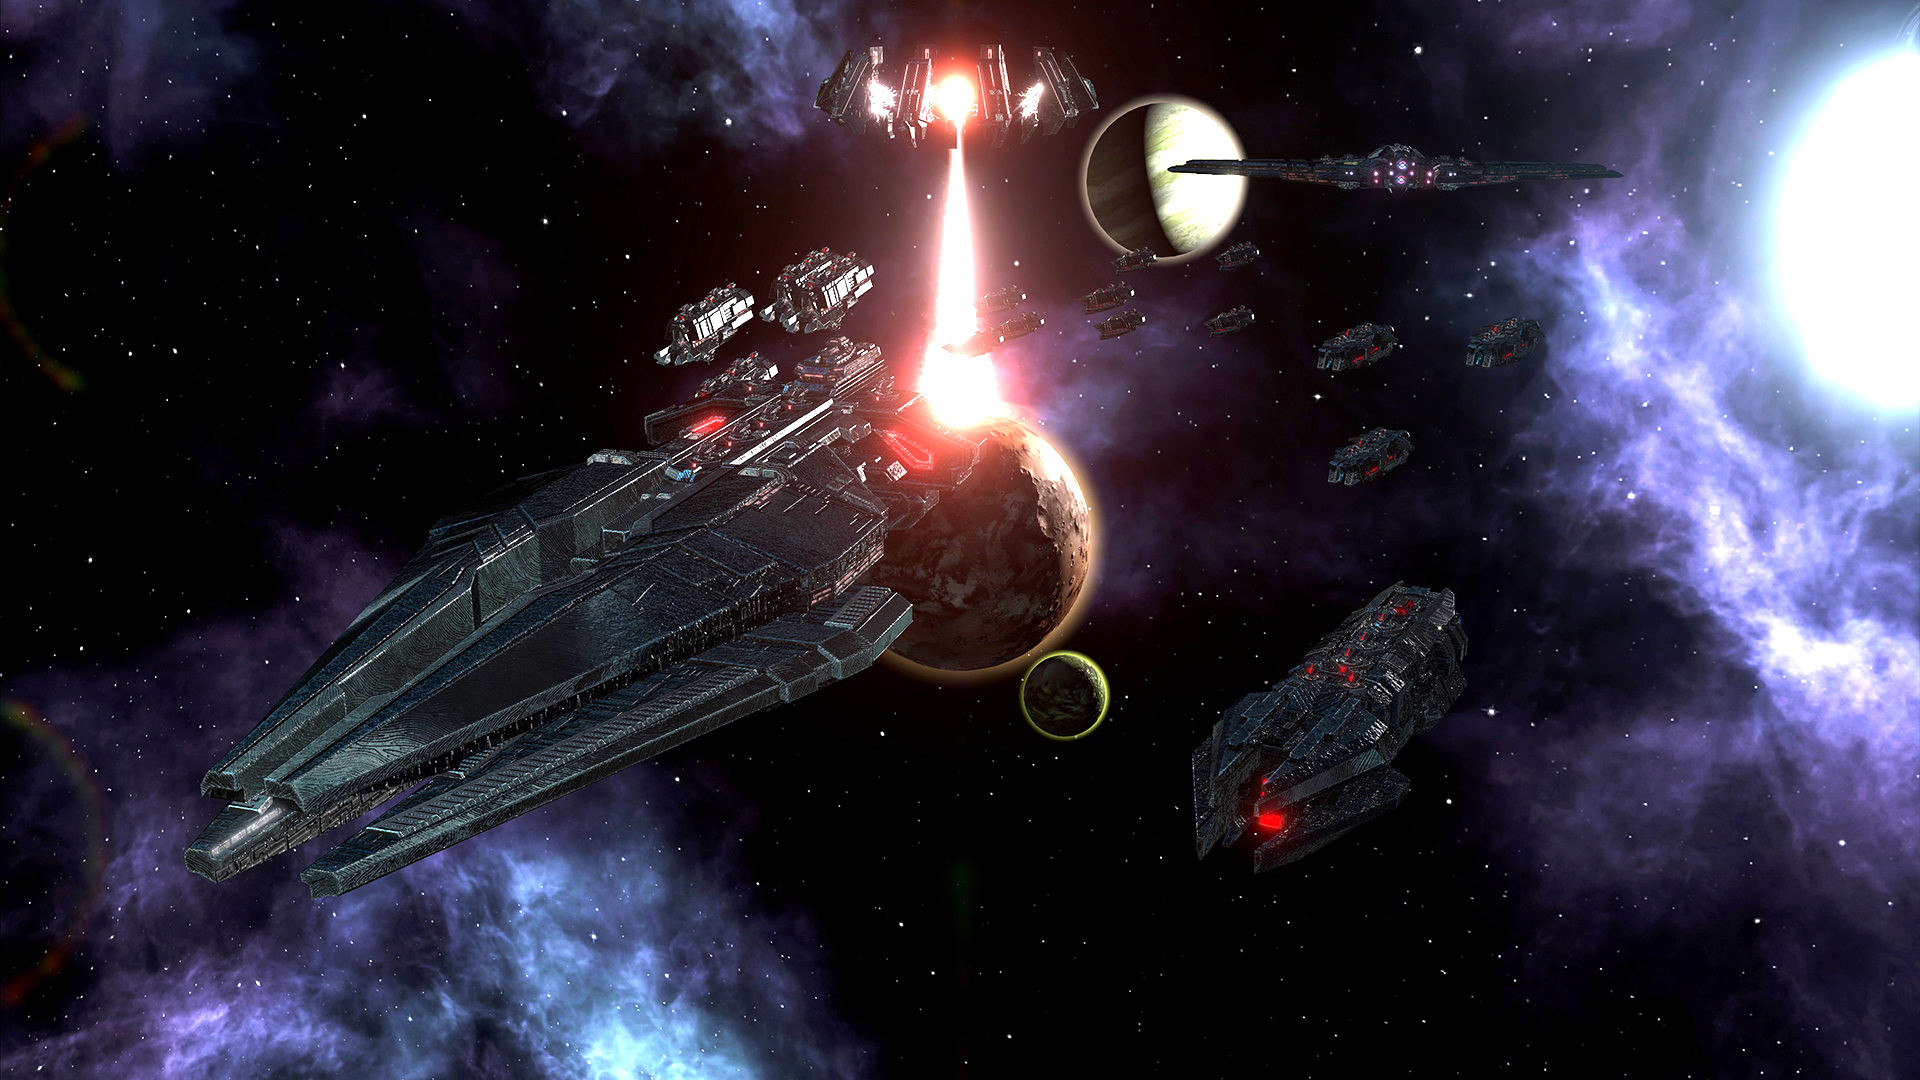 The Stellaris Star Wars expansion will launch next month